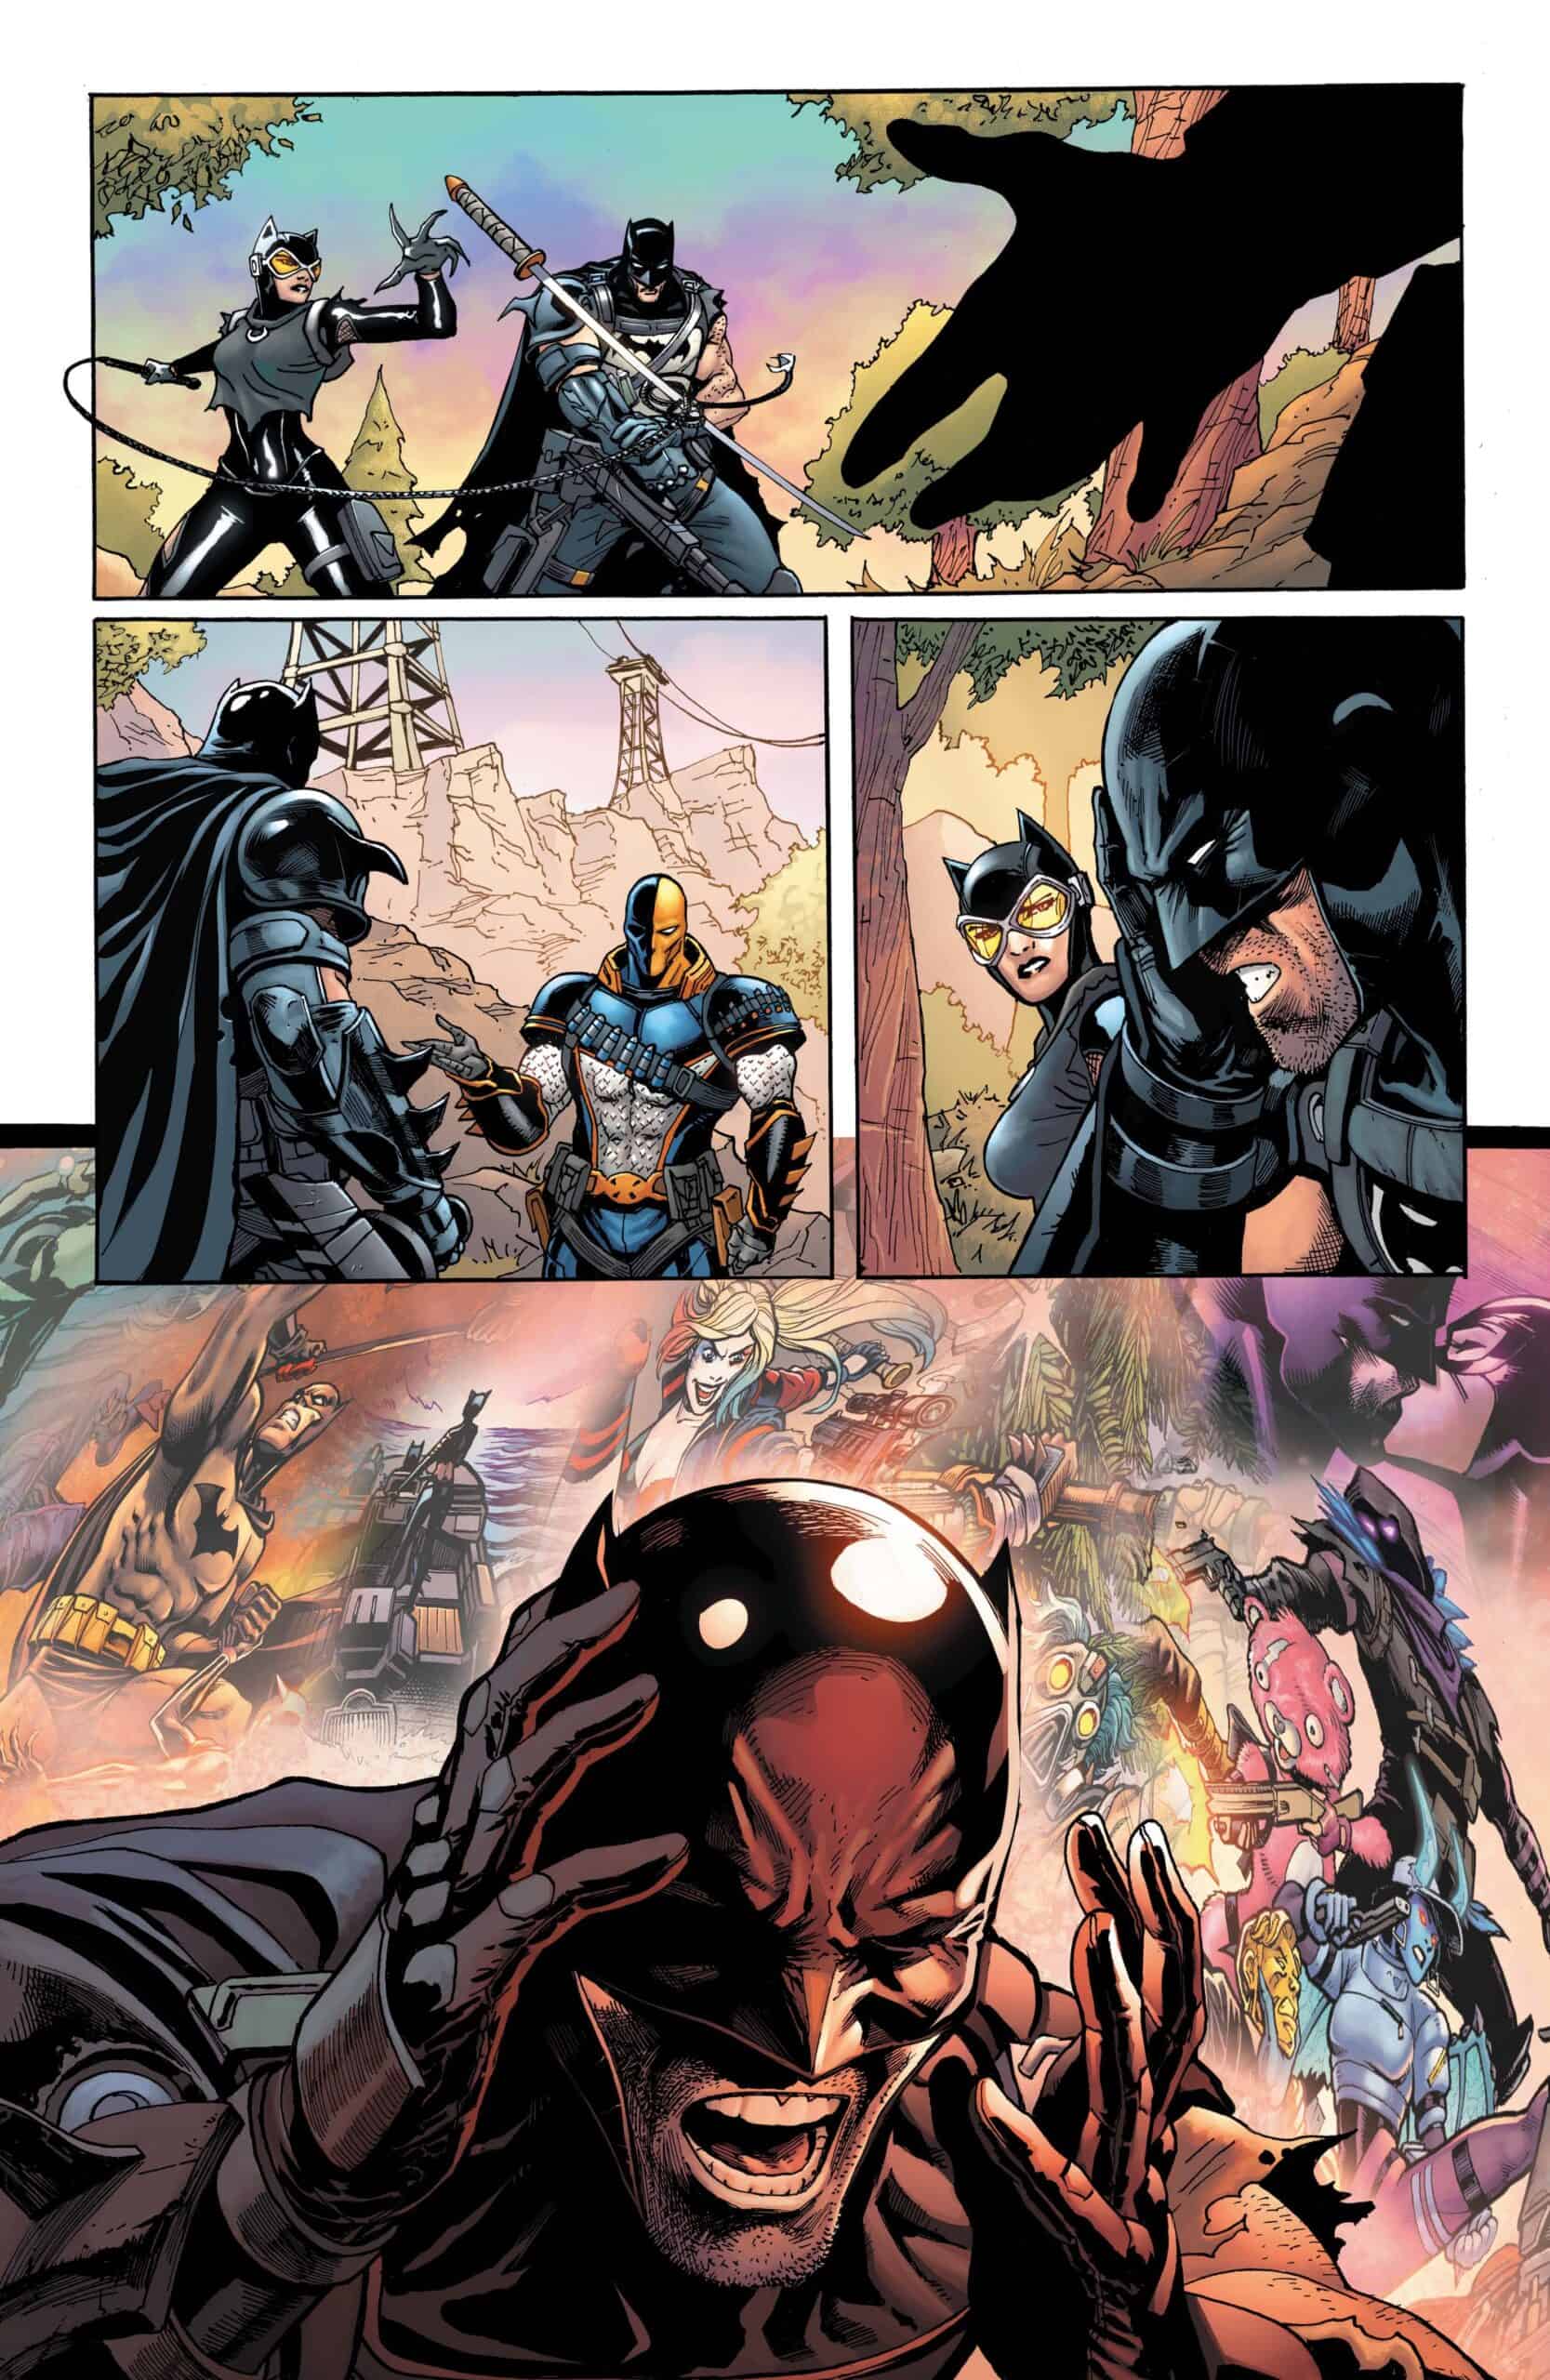 NEWS WATCH: First Look at BATMAN / FORTNITE: ZERO POINT #4 - Comic Watch